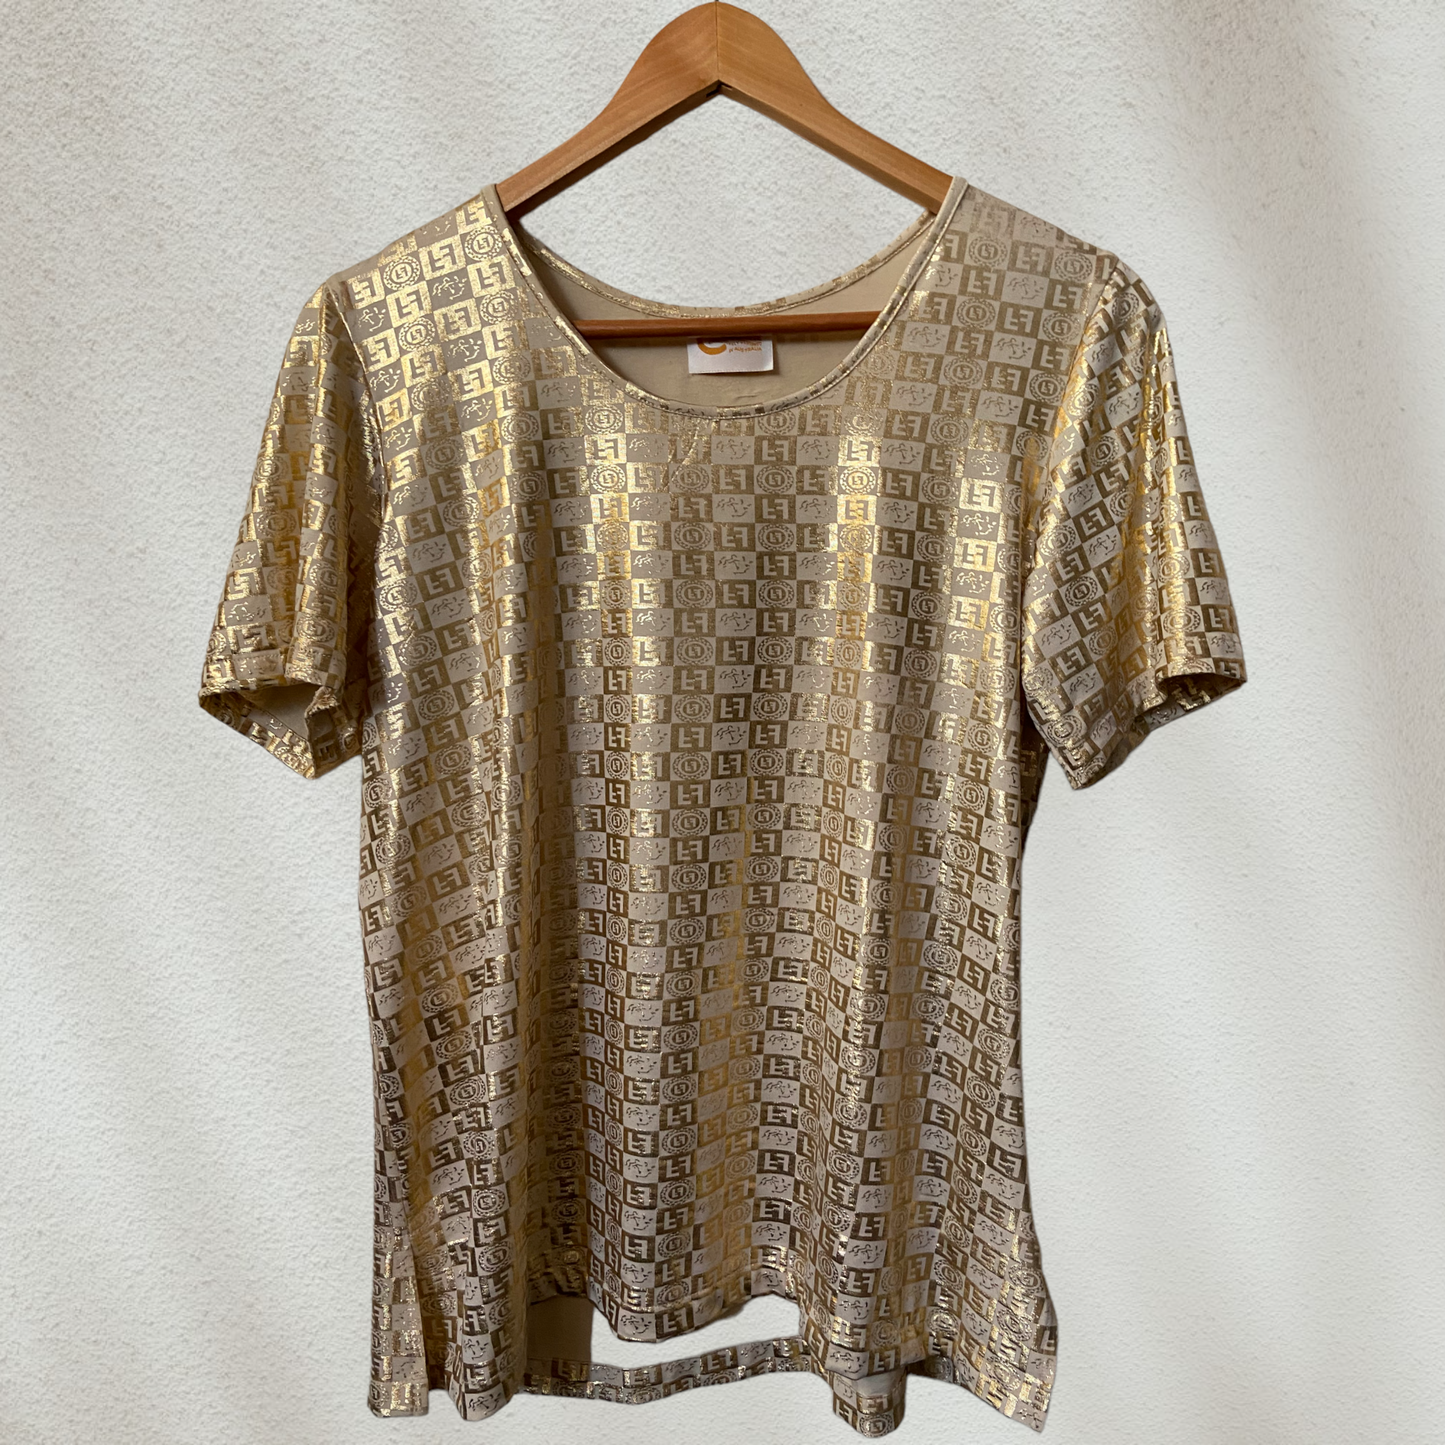 Gretta Gold T shirt Size 12-14